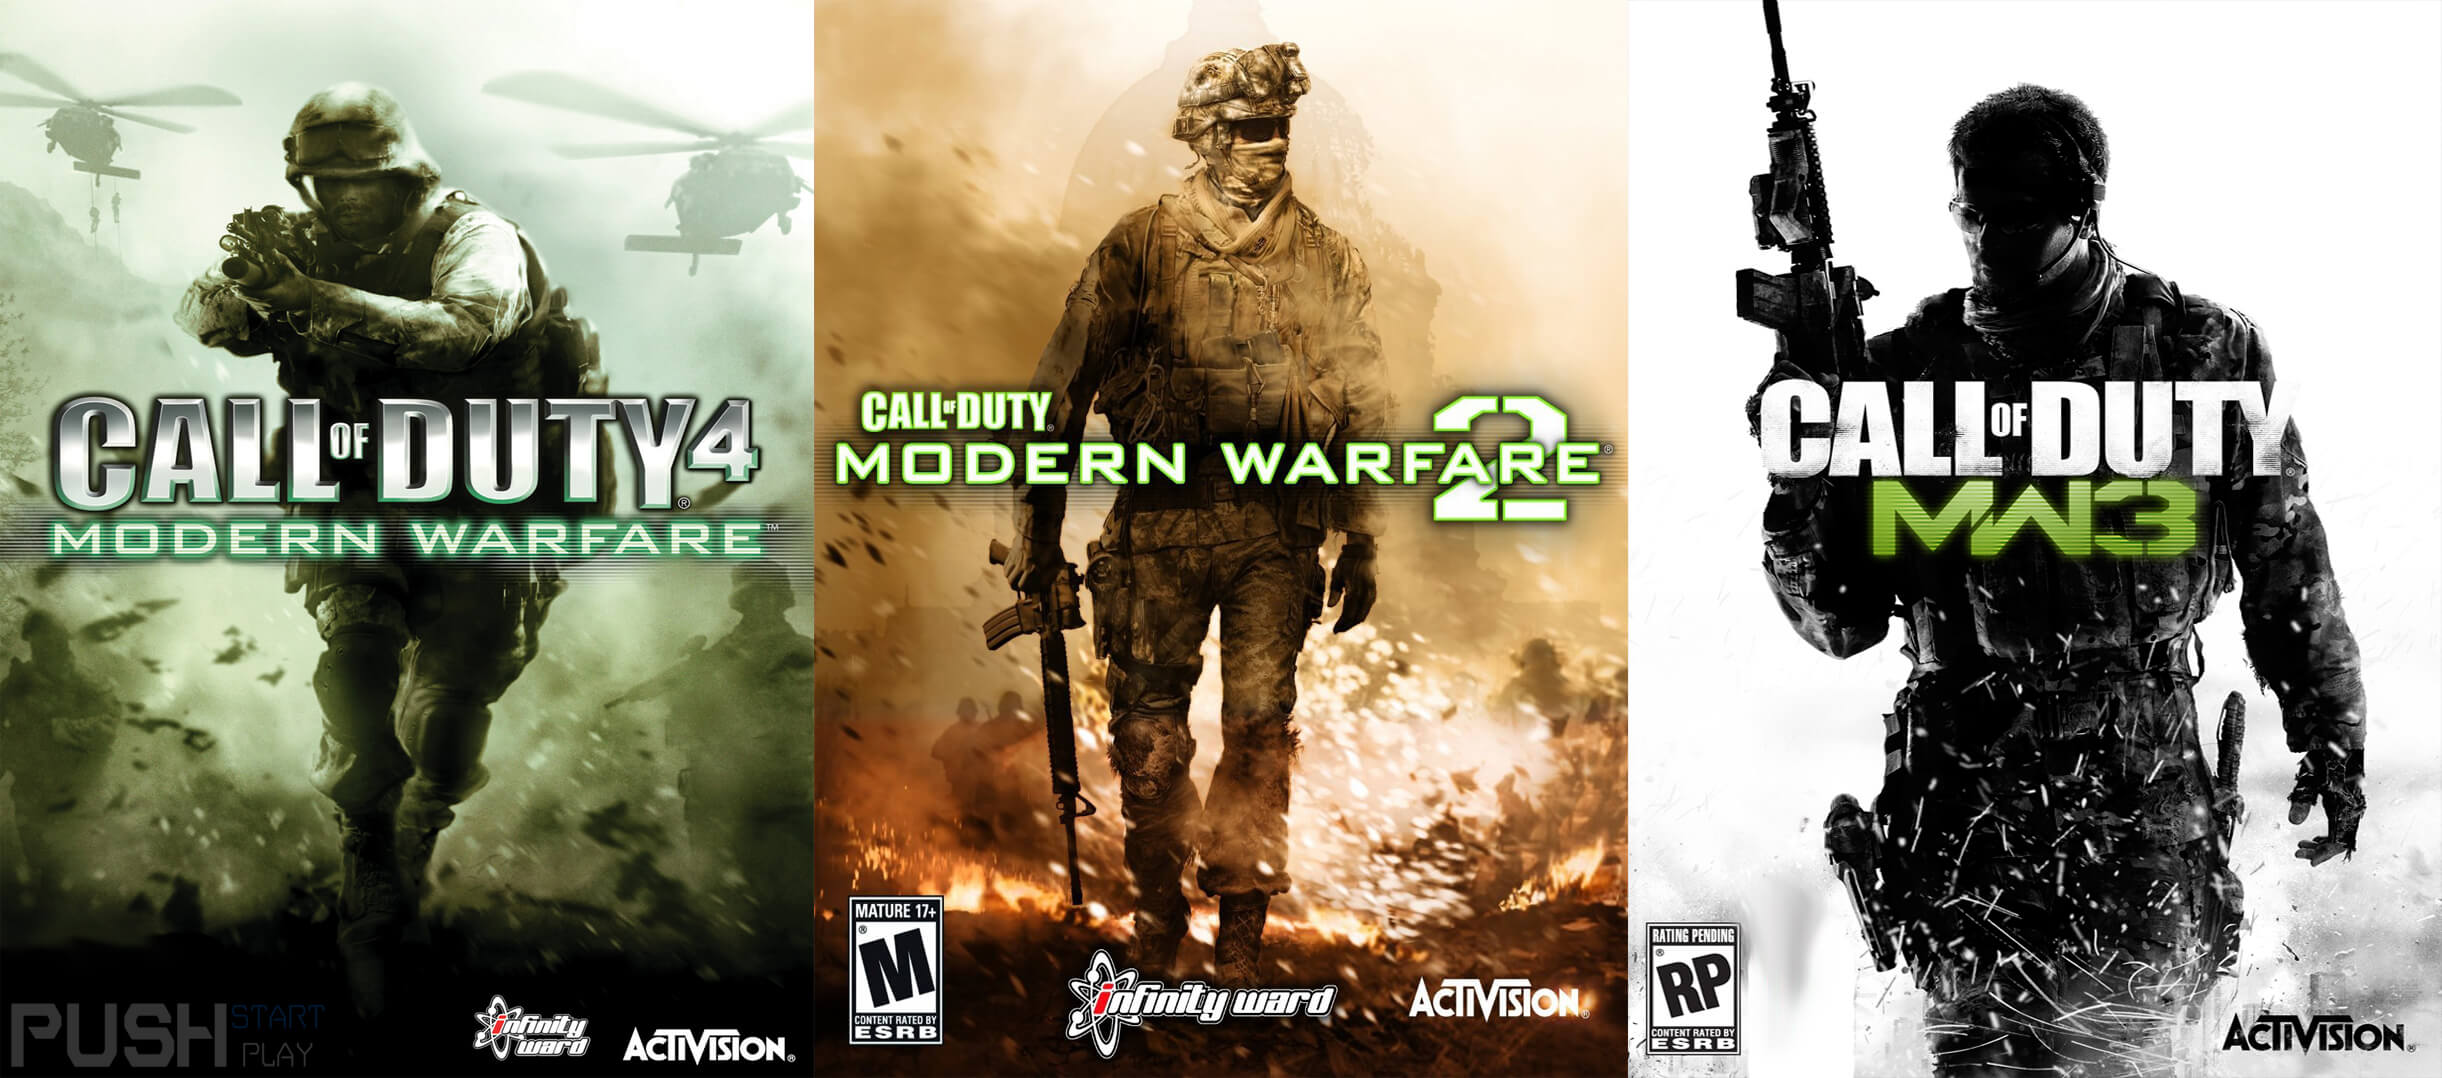 Modern warfare trilogy 2